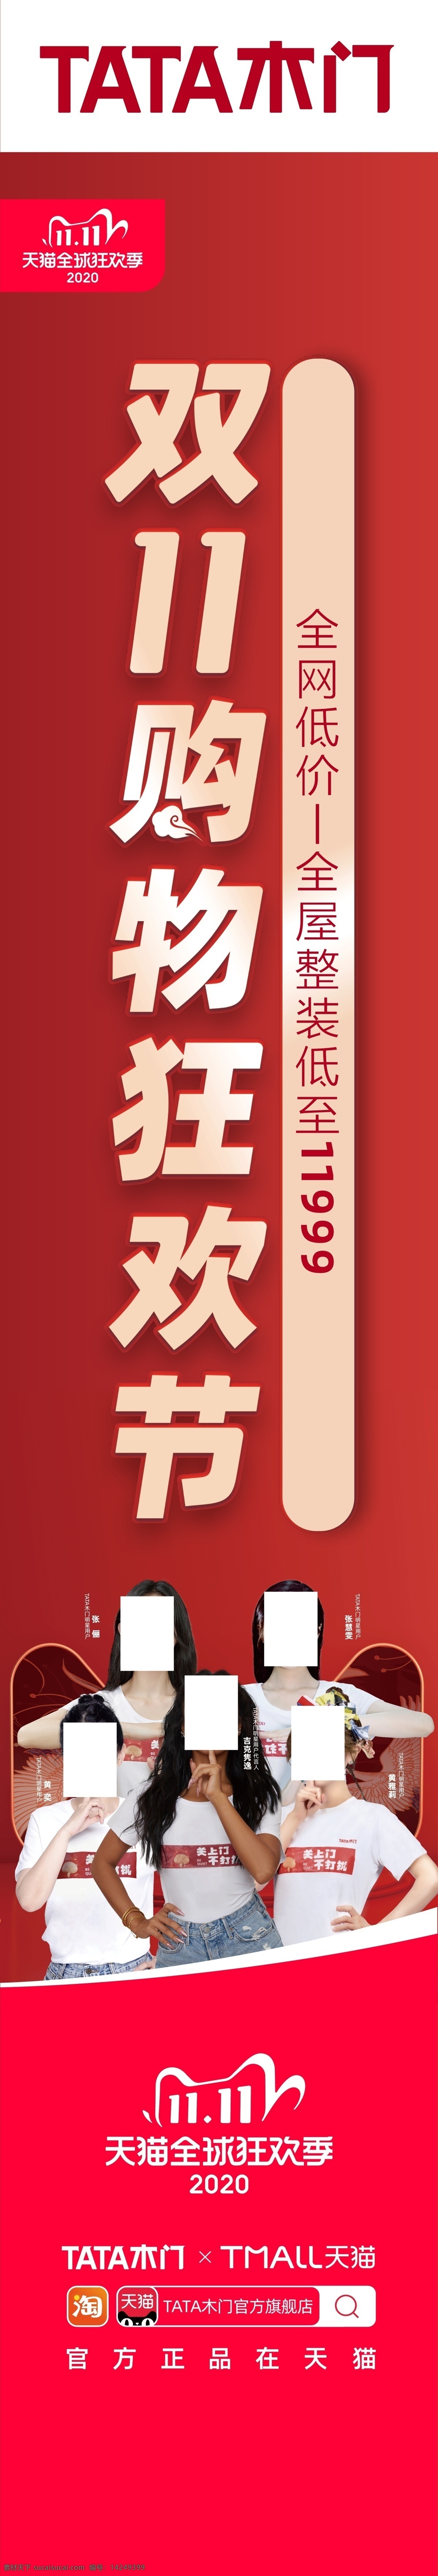 tata 木门 tata木门 双十一 购物狂欢节 天猫底图 标志 红色背景